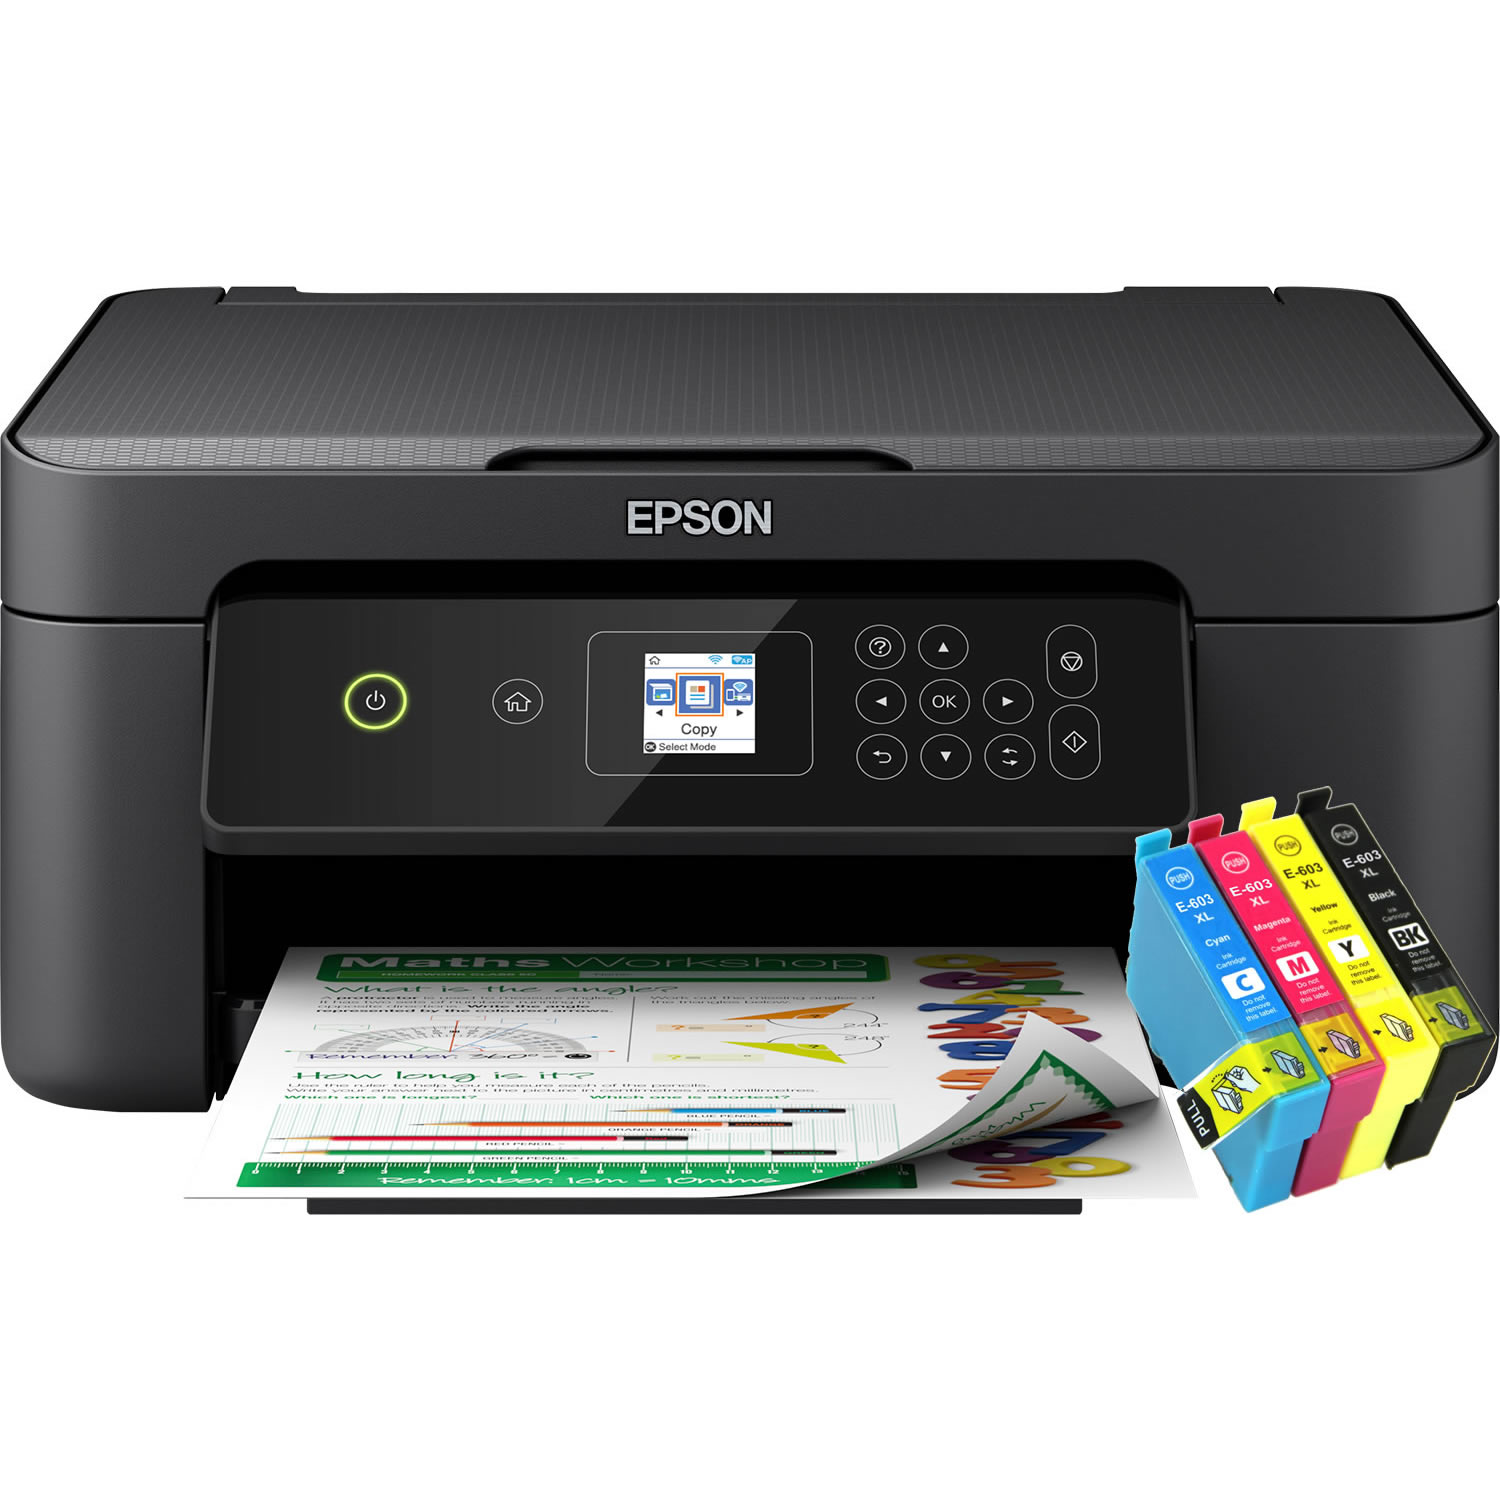 Epson XP 2200 Ink